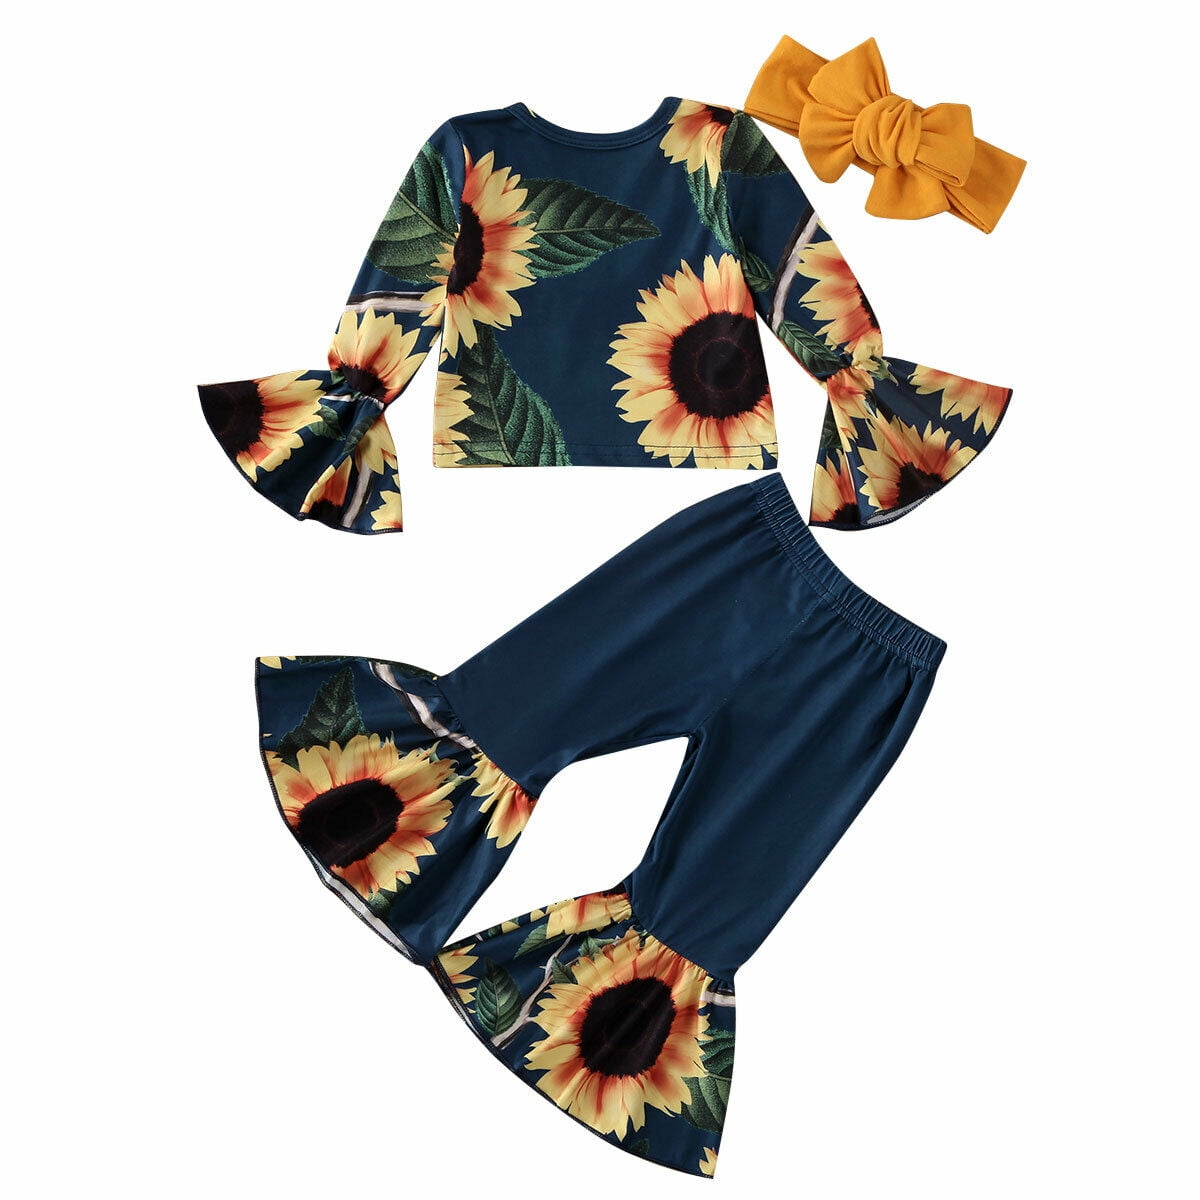 NWT Tie Dye Sunflower Girls Ruffle Sleeve Bell Bottoms Outfit Set 